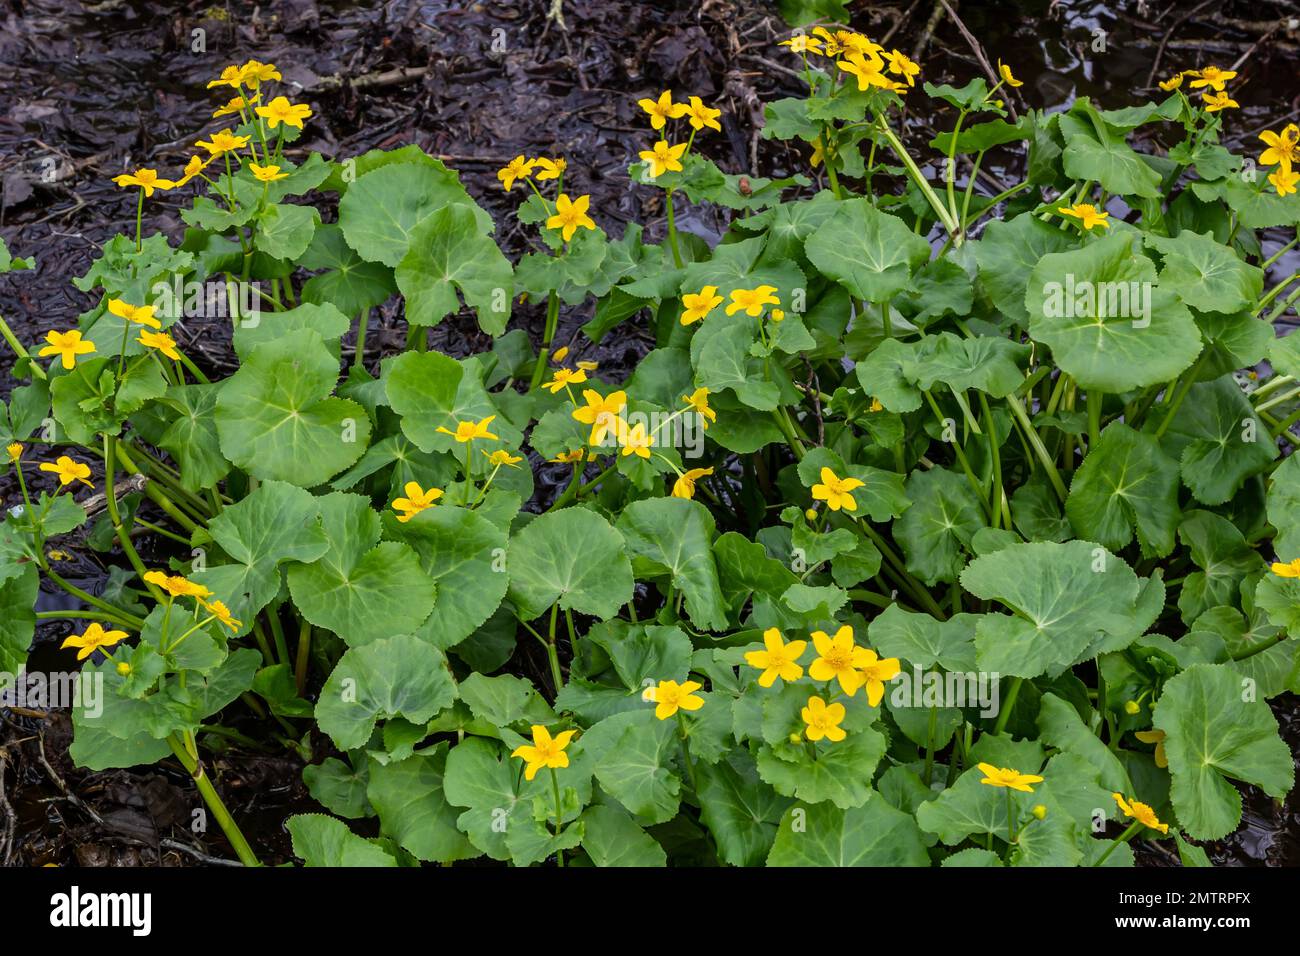 Caltha palustris, marsh-marigold or kingcup, flowers in wet woodland, wild flower. Stock Photo